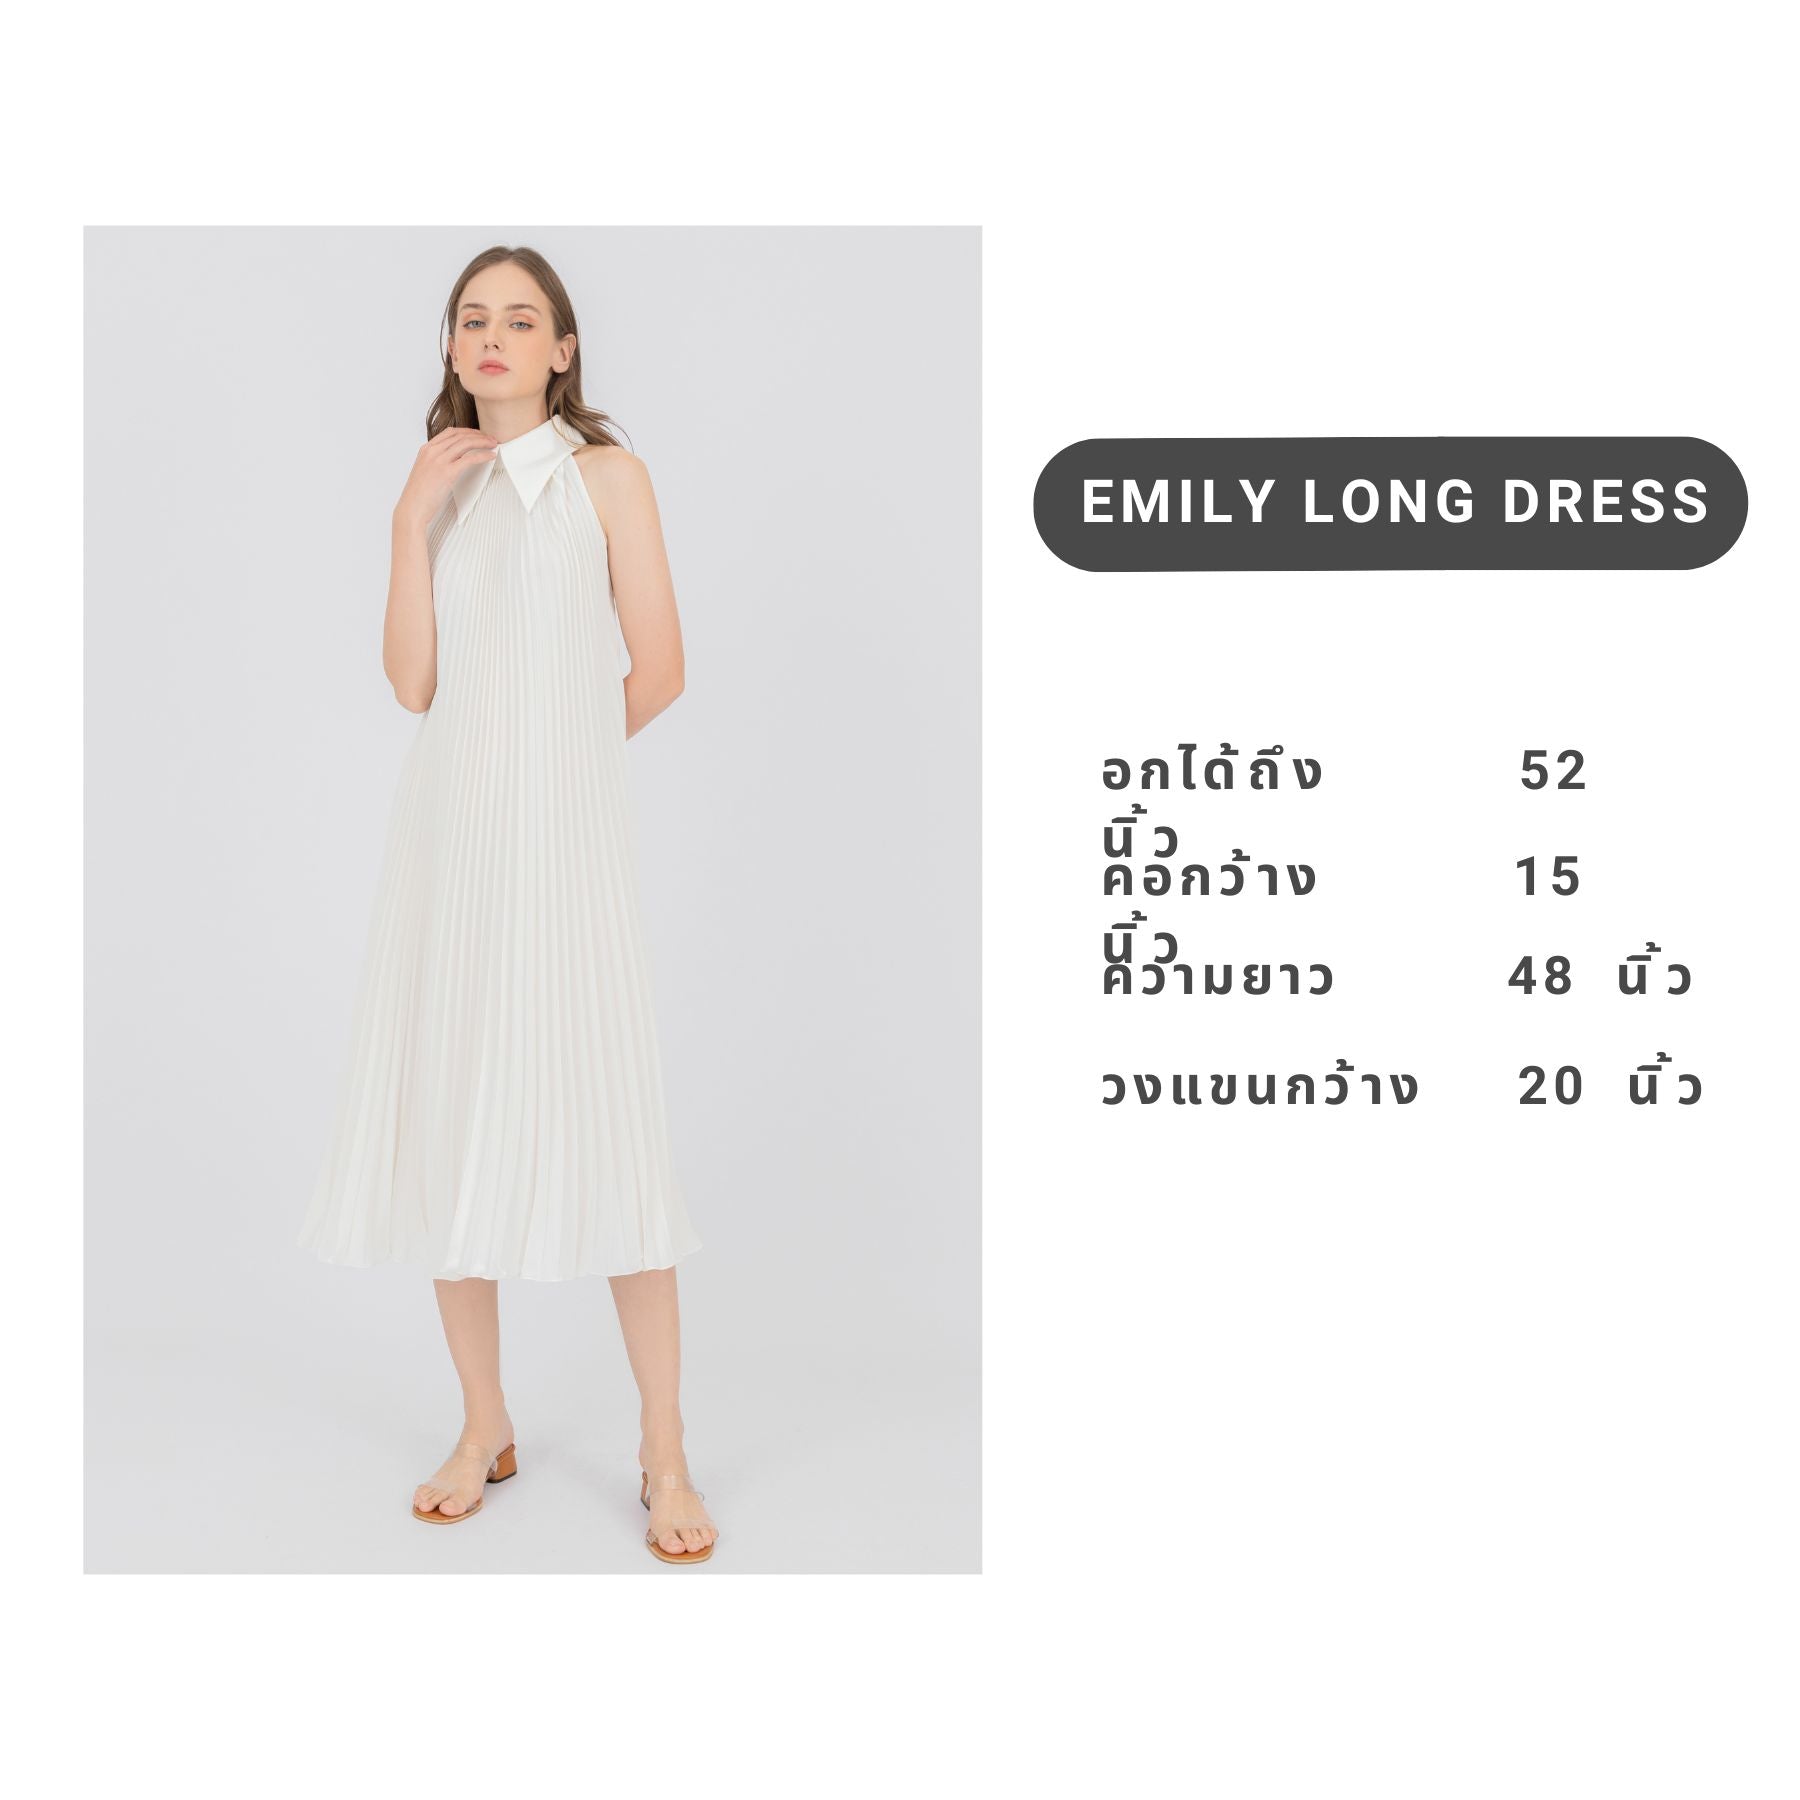 NICHp : Emily long dress